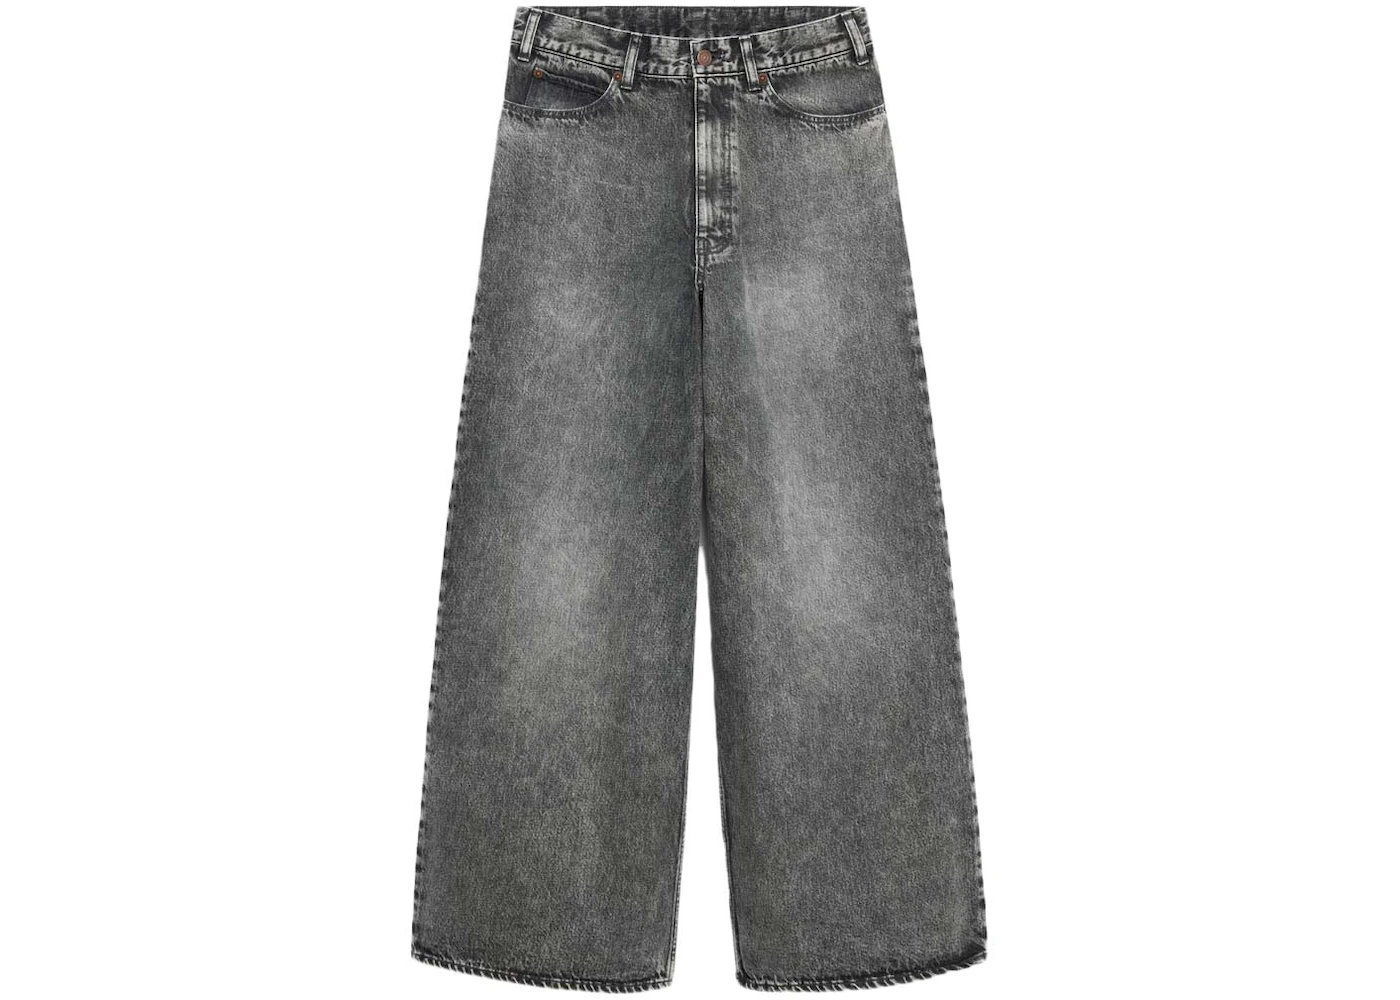 Celine Elephant Jeans Charcoal/Salt and Pepepr Wash Men's - GB